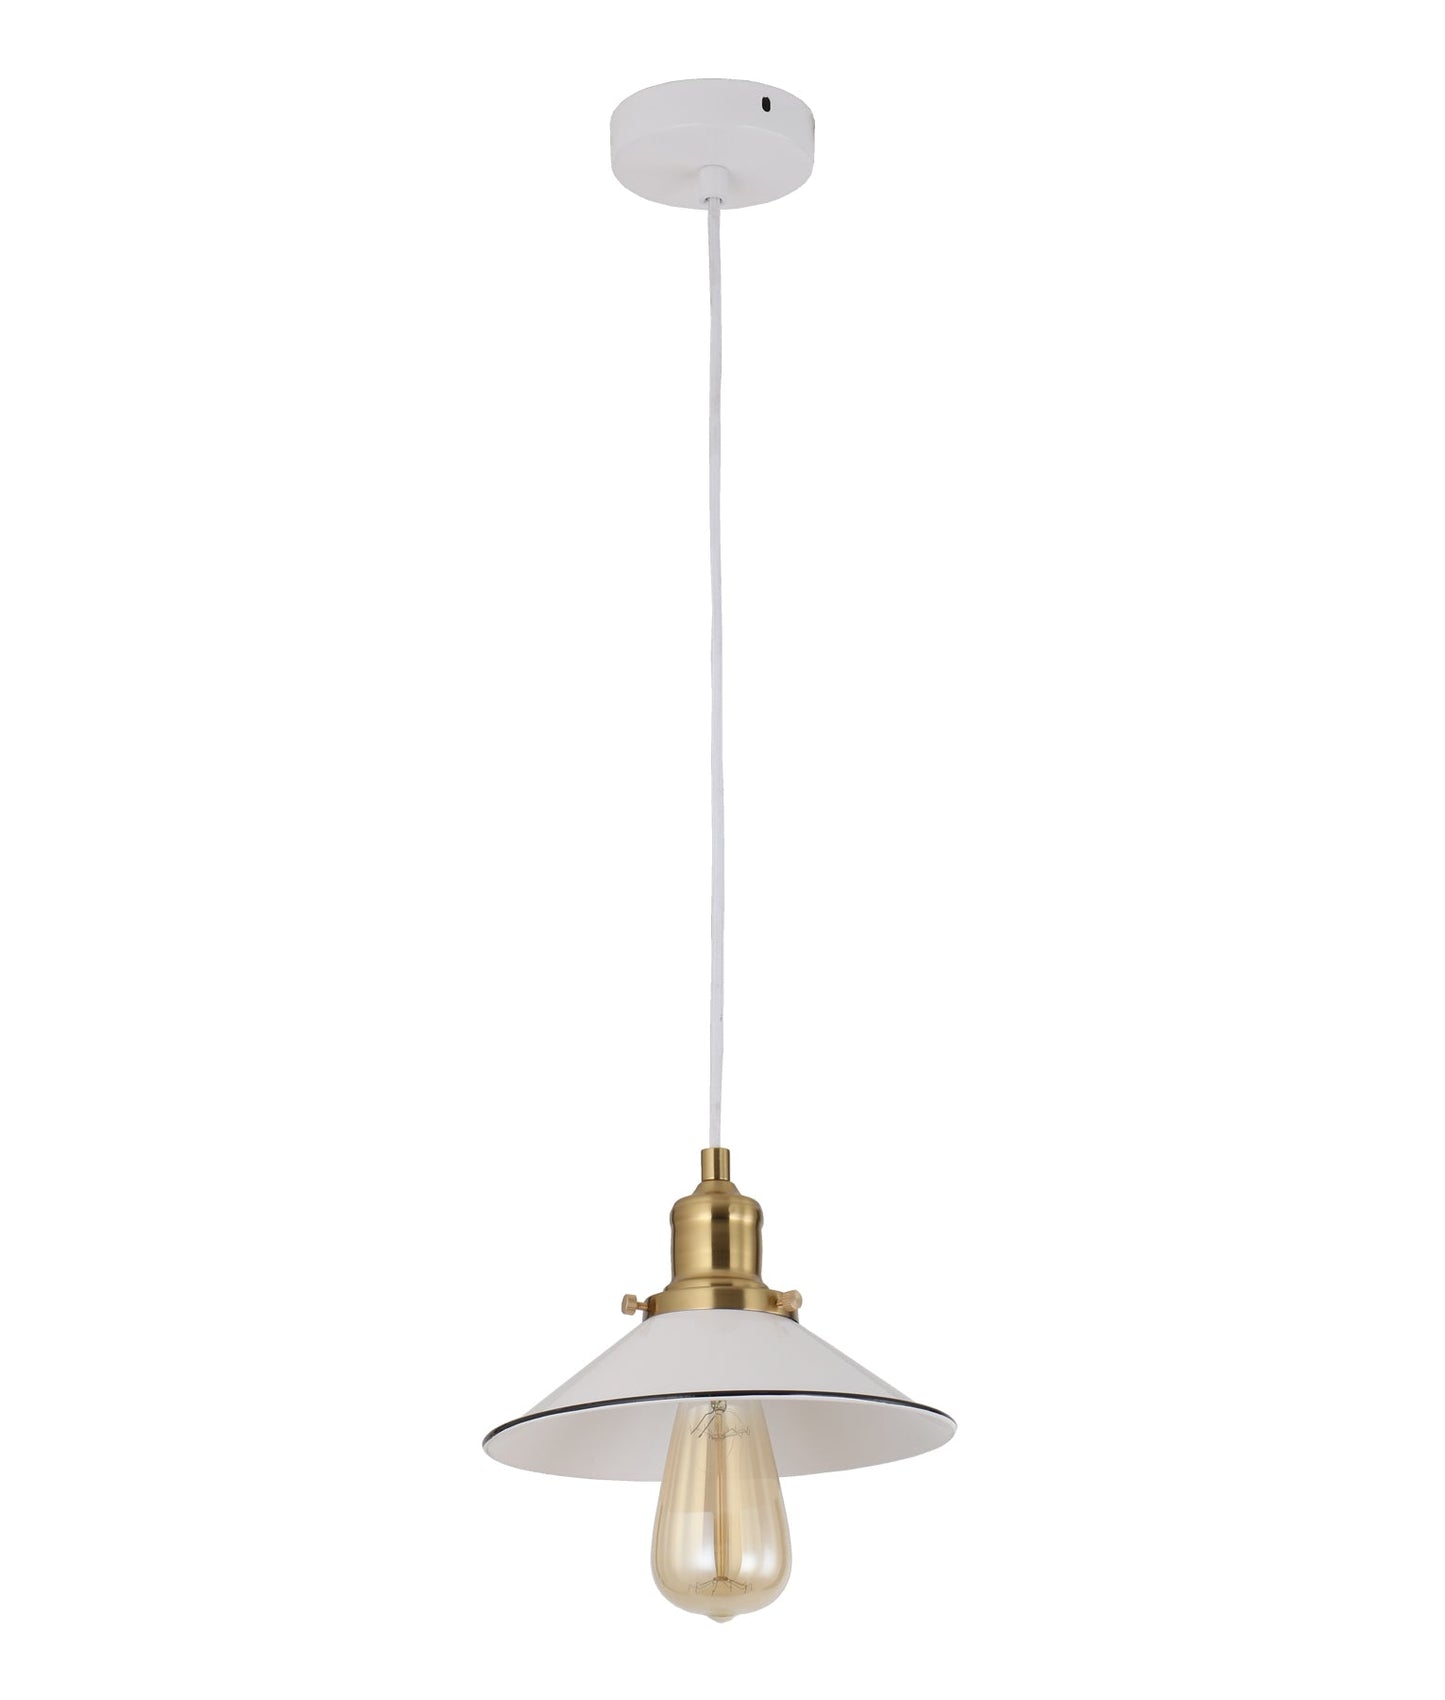 CEREMA: Interior Small White with Antique Brass & Black Highlight Coolie Pendant Light